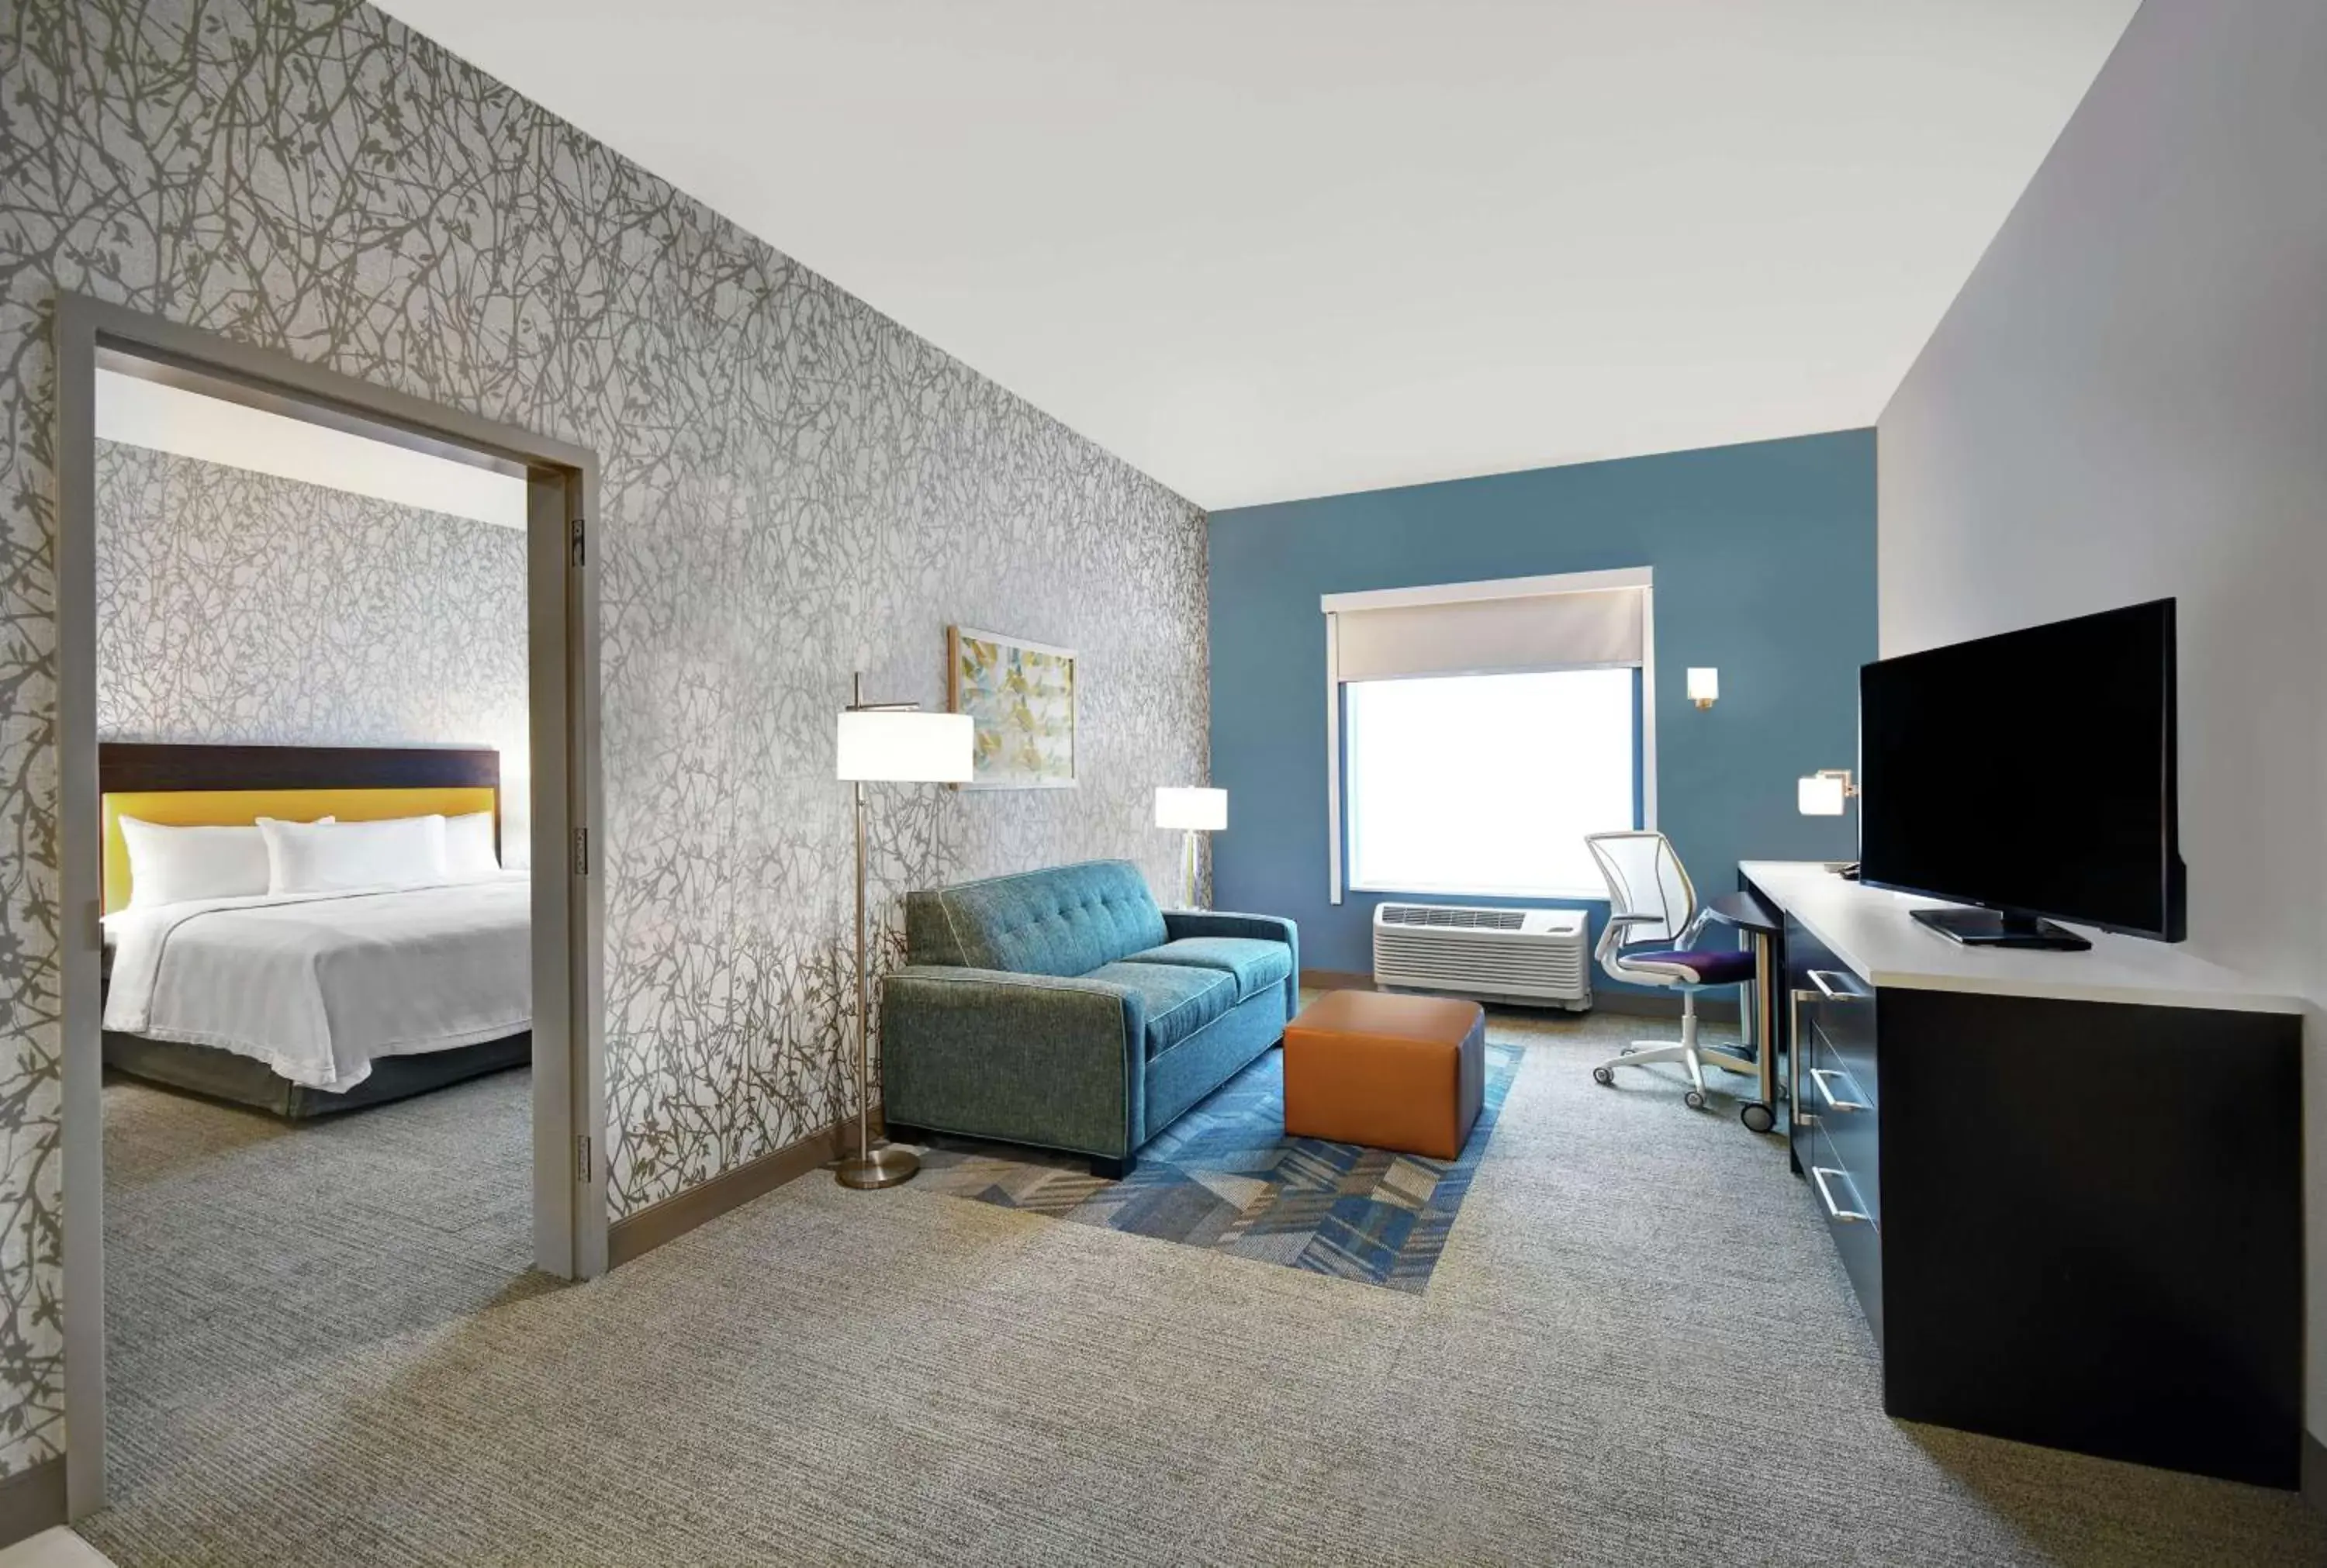 Bedroom, TV/Entertainment Center in Home2 Suites By Hilton Lawrenceville Atlanta Sugarloaf, Ga